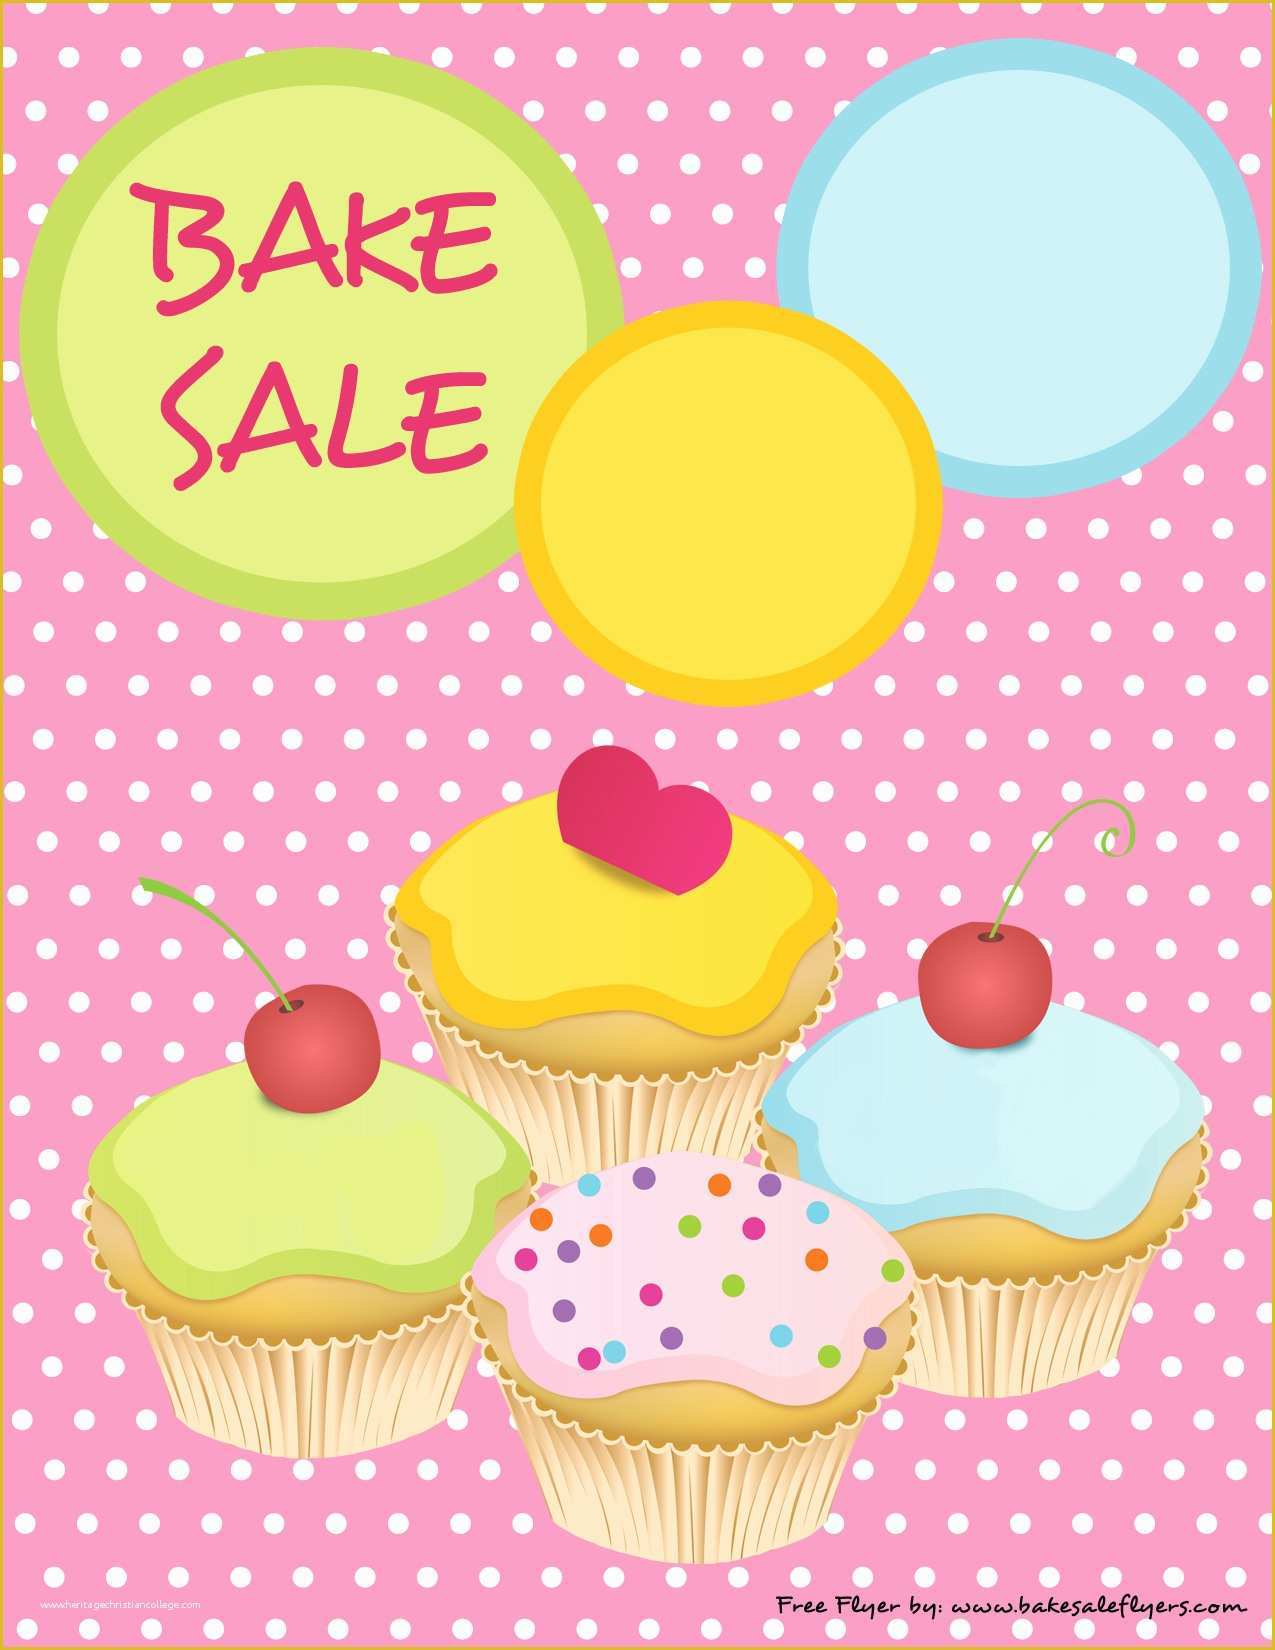 Bake Sale Flyer Template Free Of Bake Sale Flyers – Free Flyer Designs